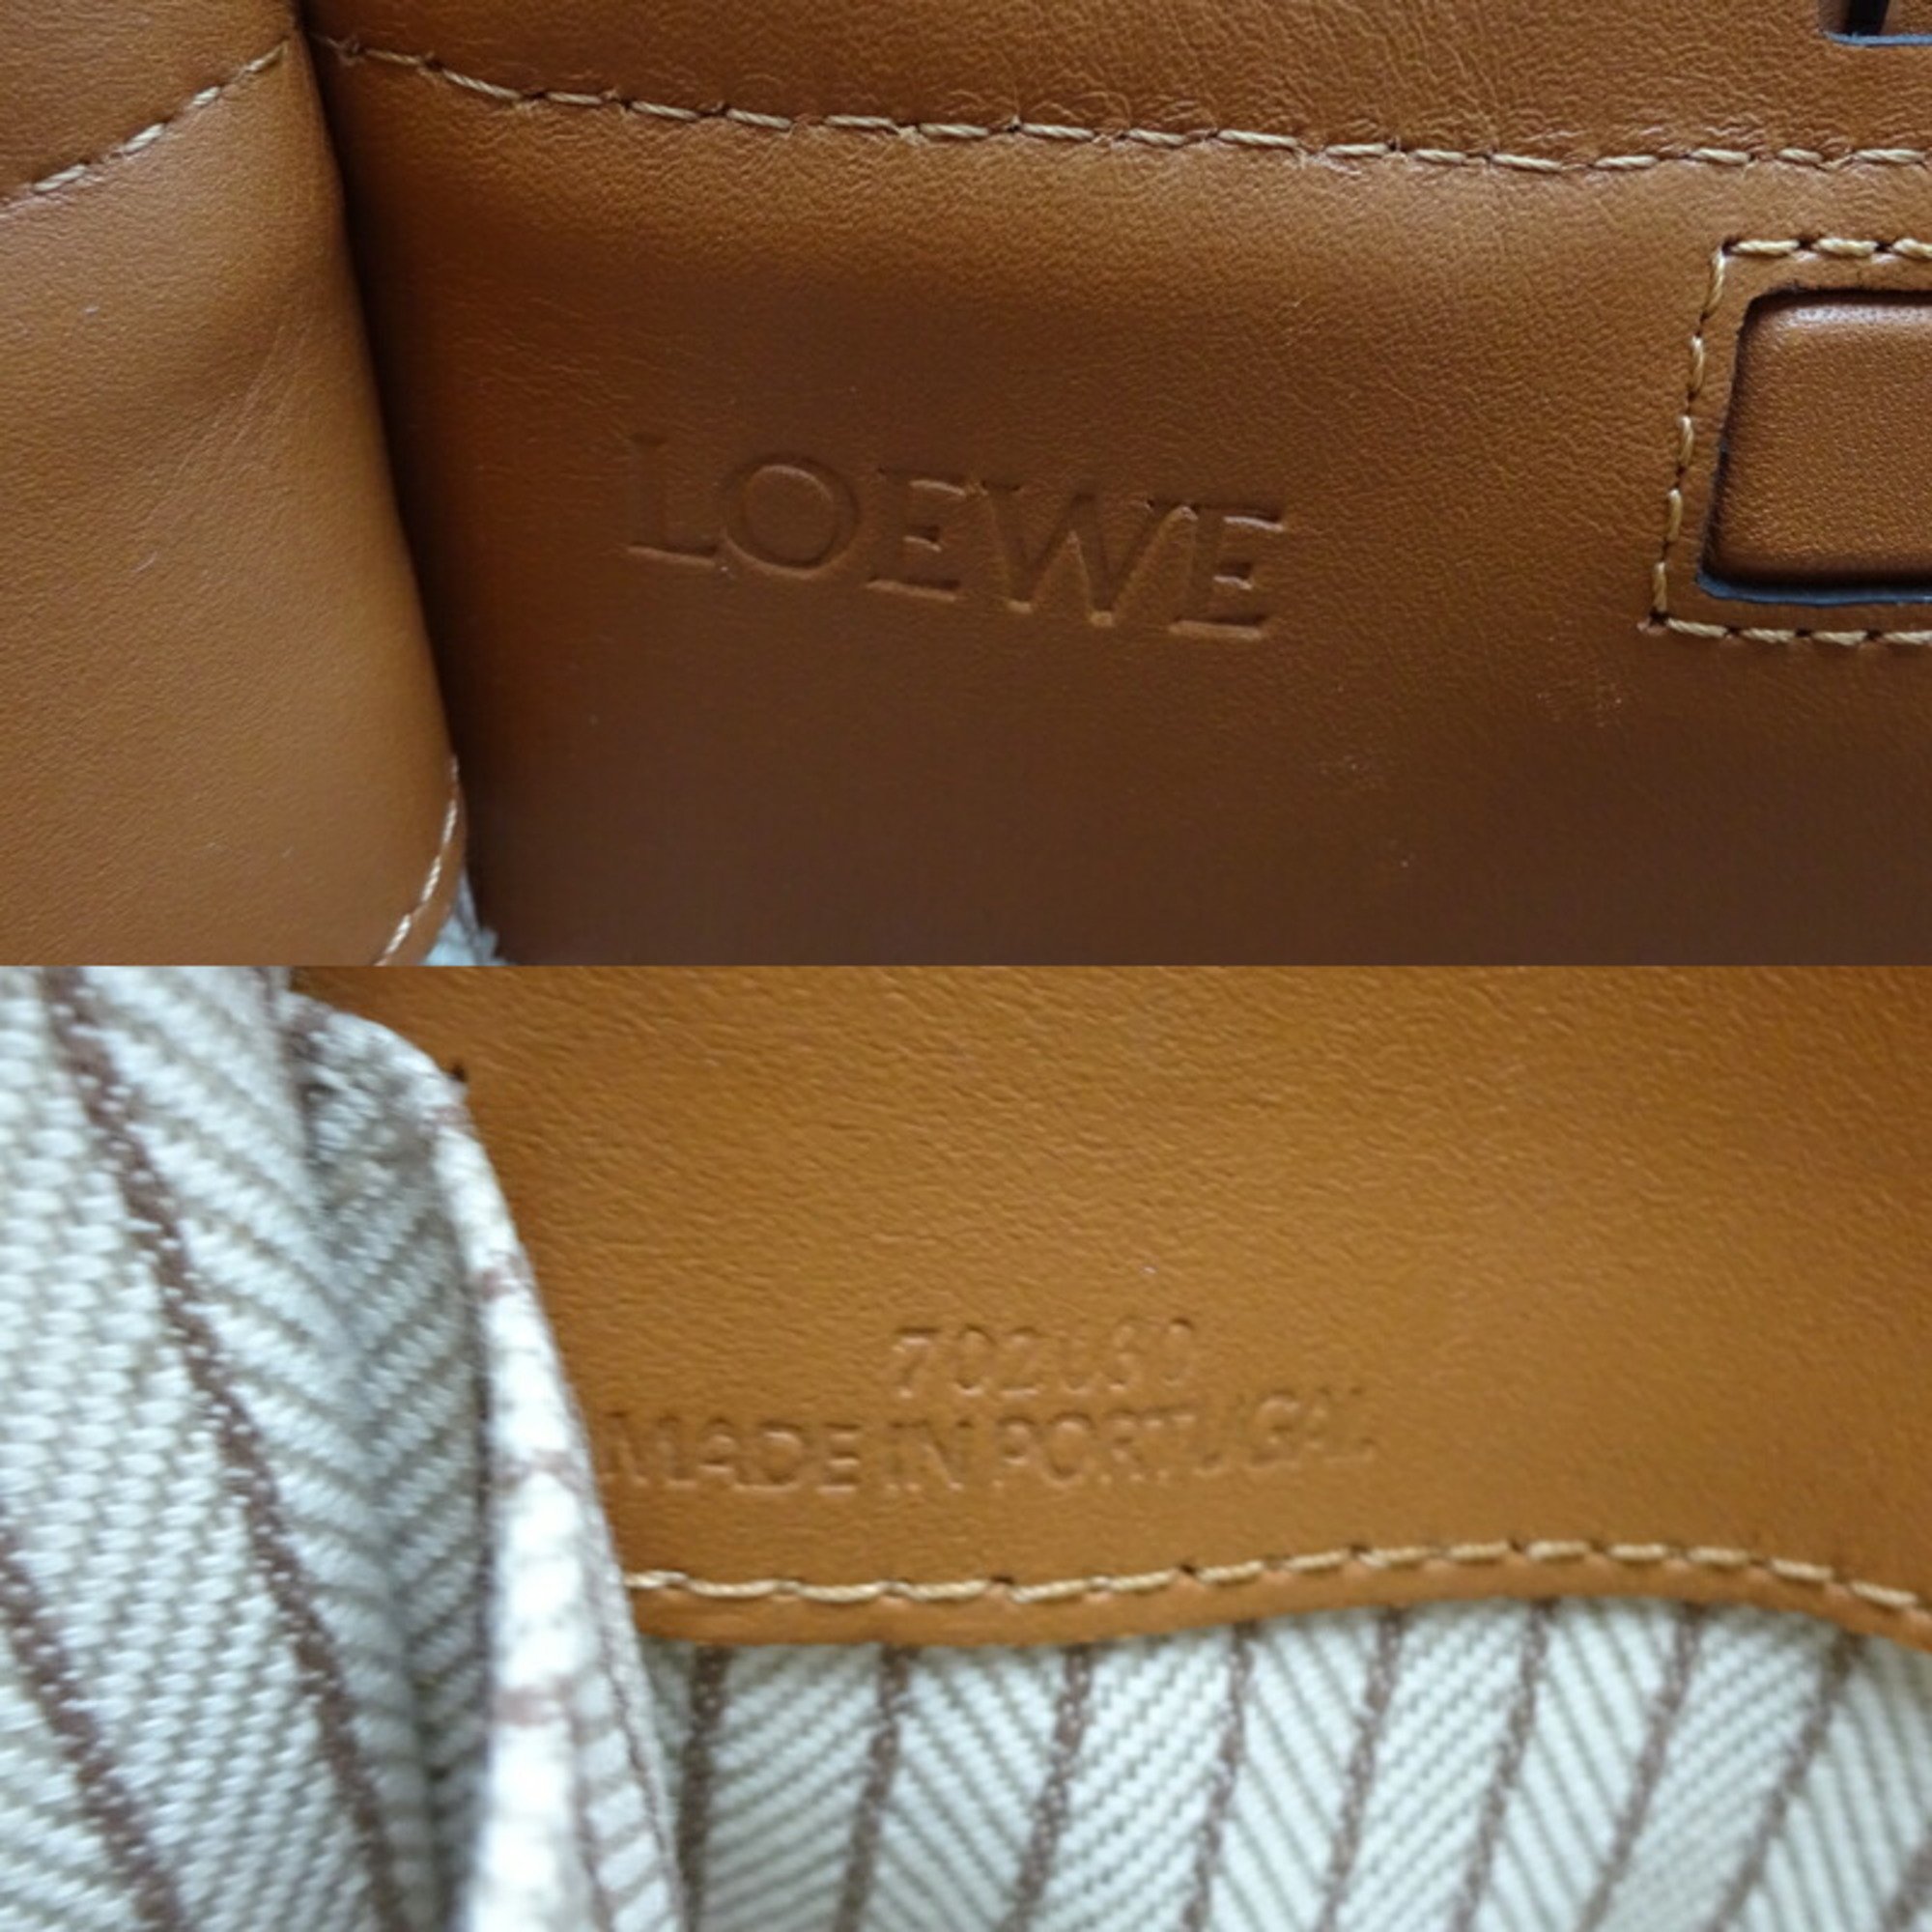 Loewe Cushion Tote Women's Shoulder Bag 330.02AA93 Canvas Brown